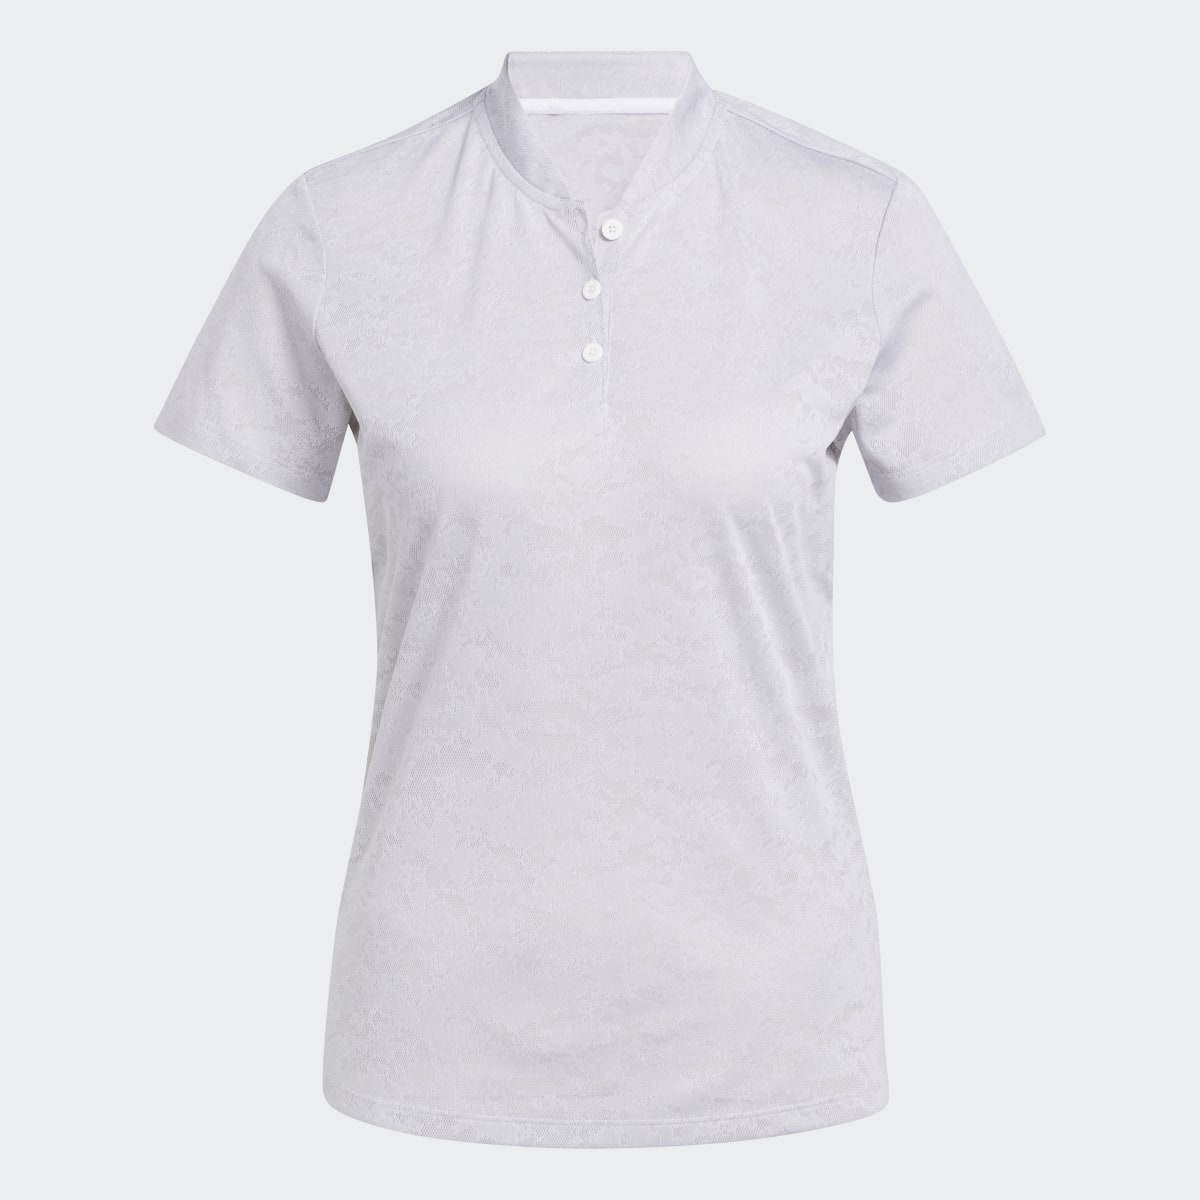 Adidas Jacquard Golf Polo Shirt. 5